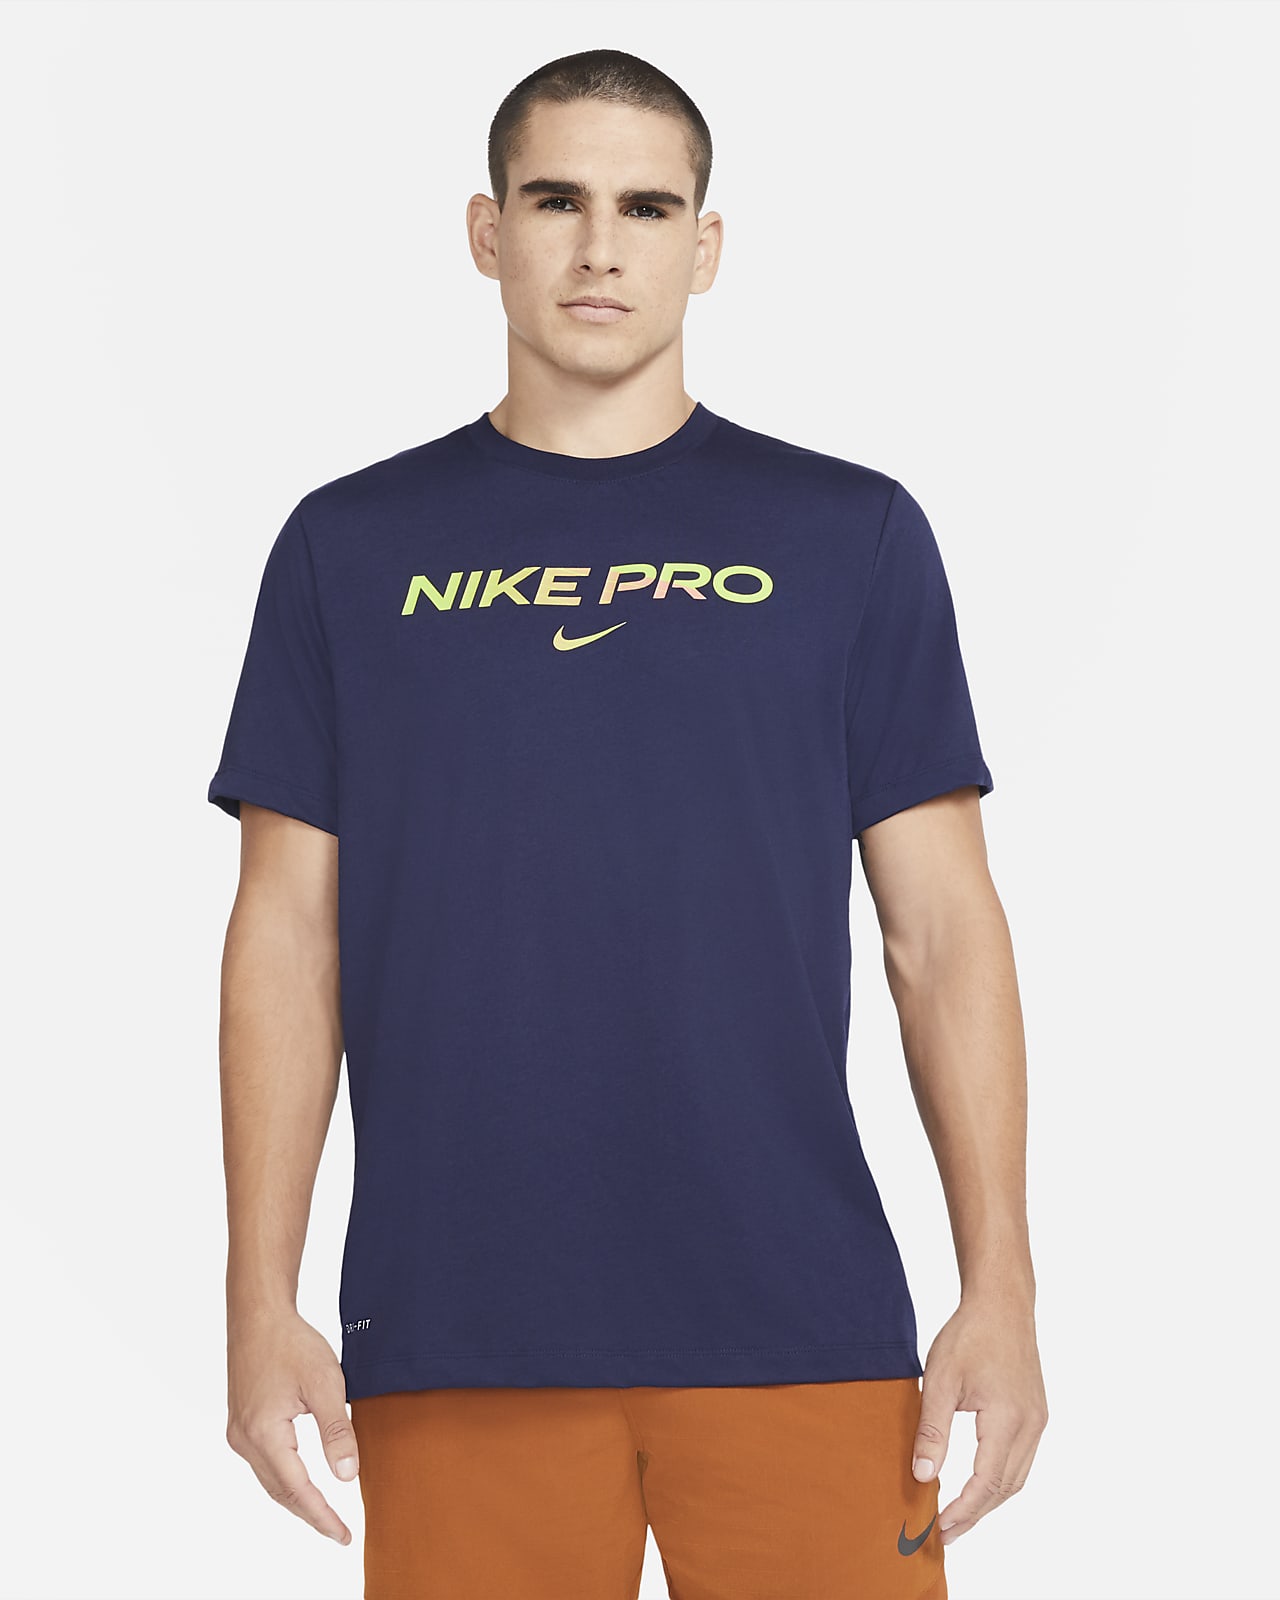 Nike Pro Men S T Shirt Nike At